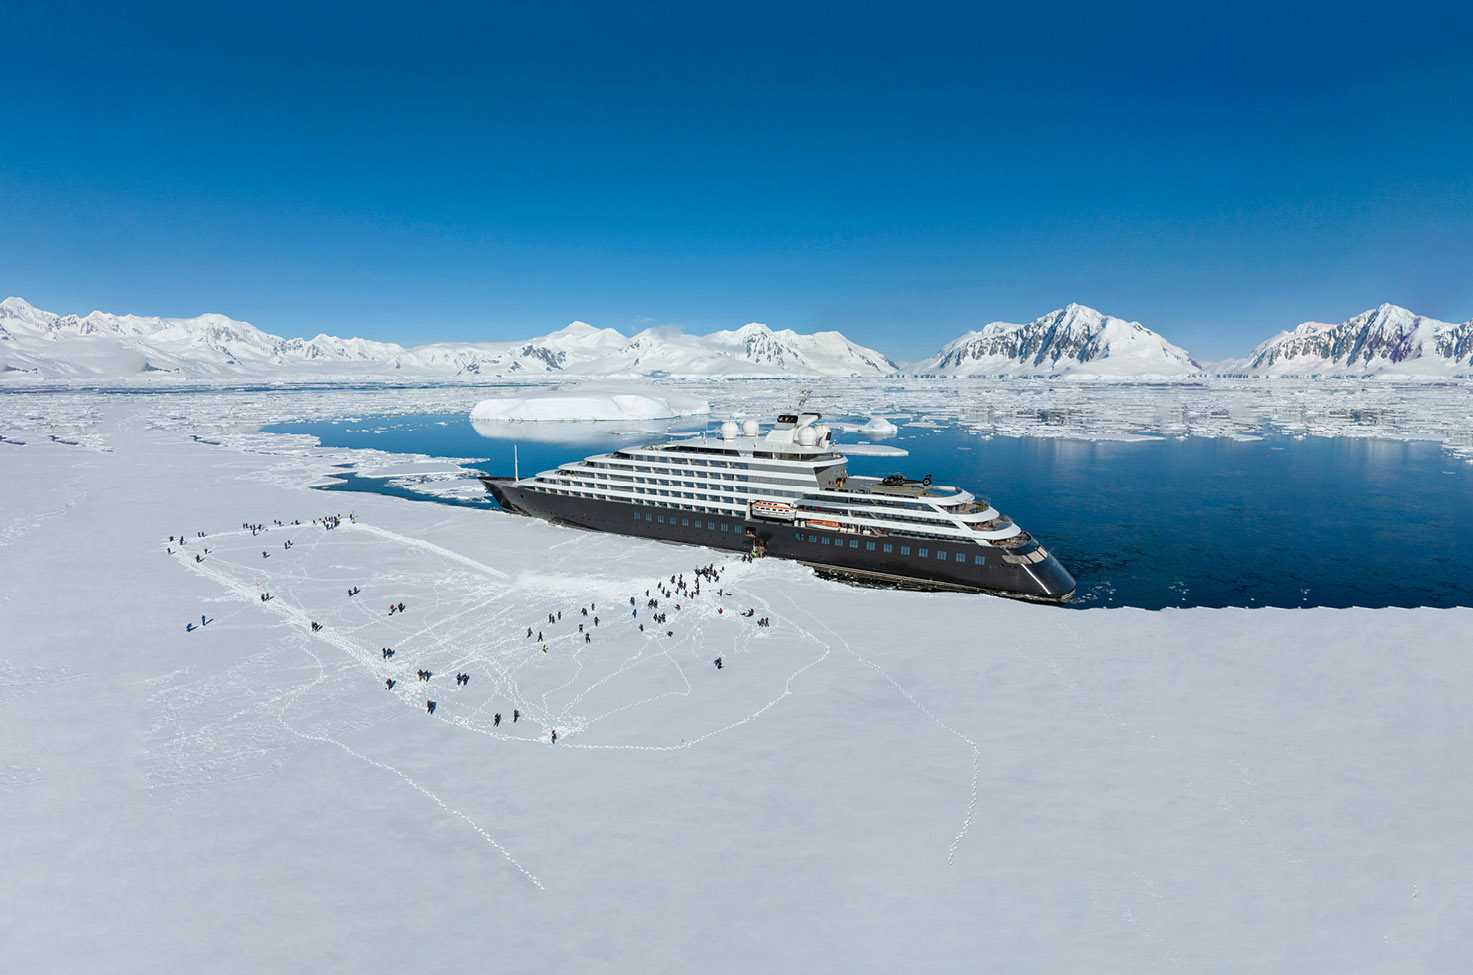 Luxury ocean cruising ship docked next to the ice in Antarctica